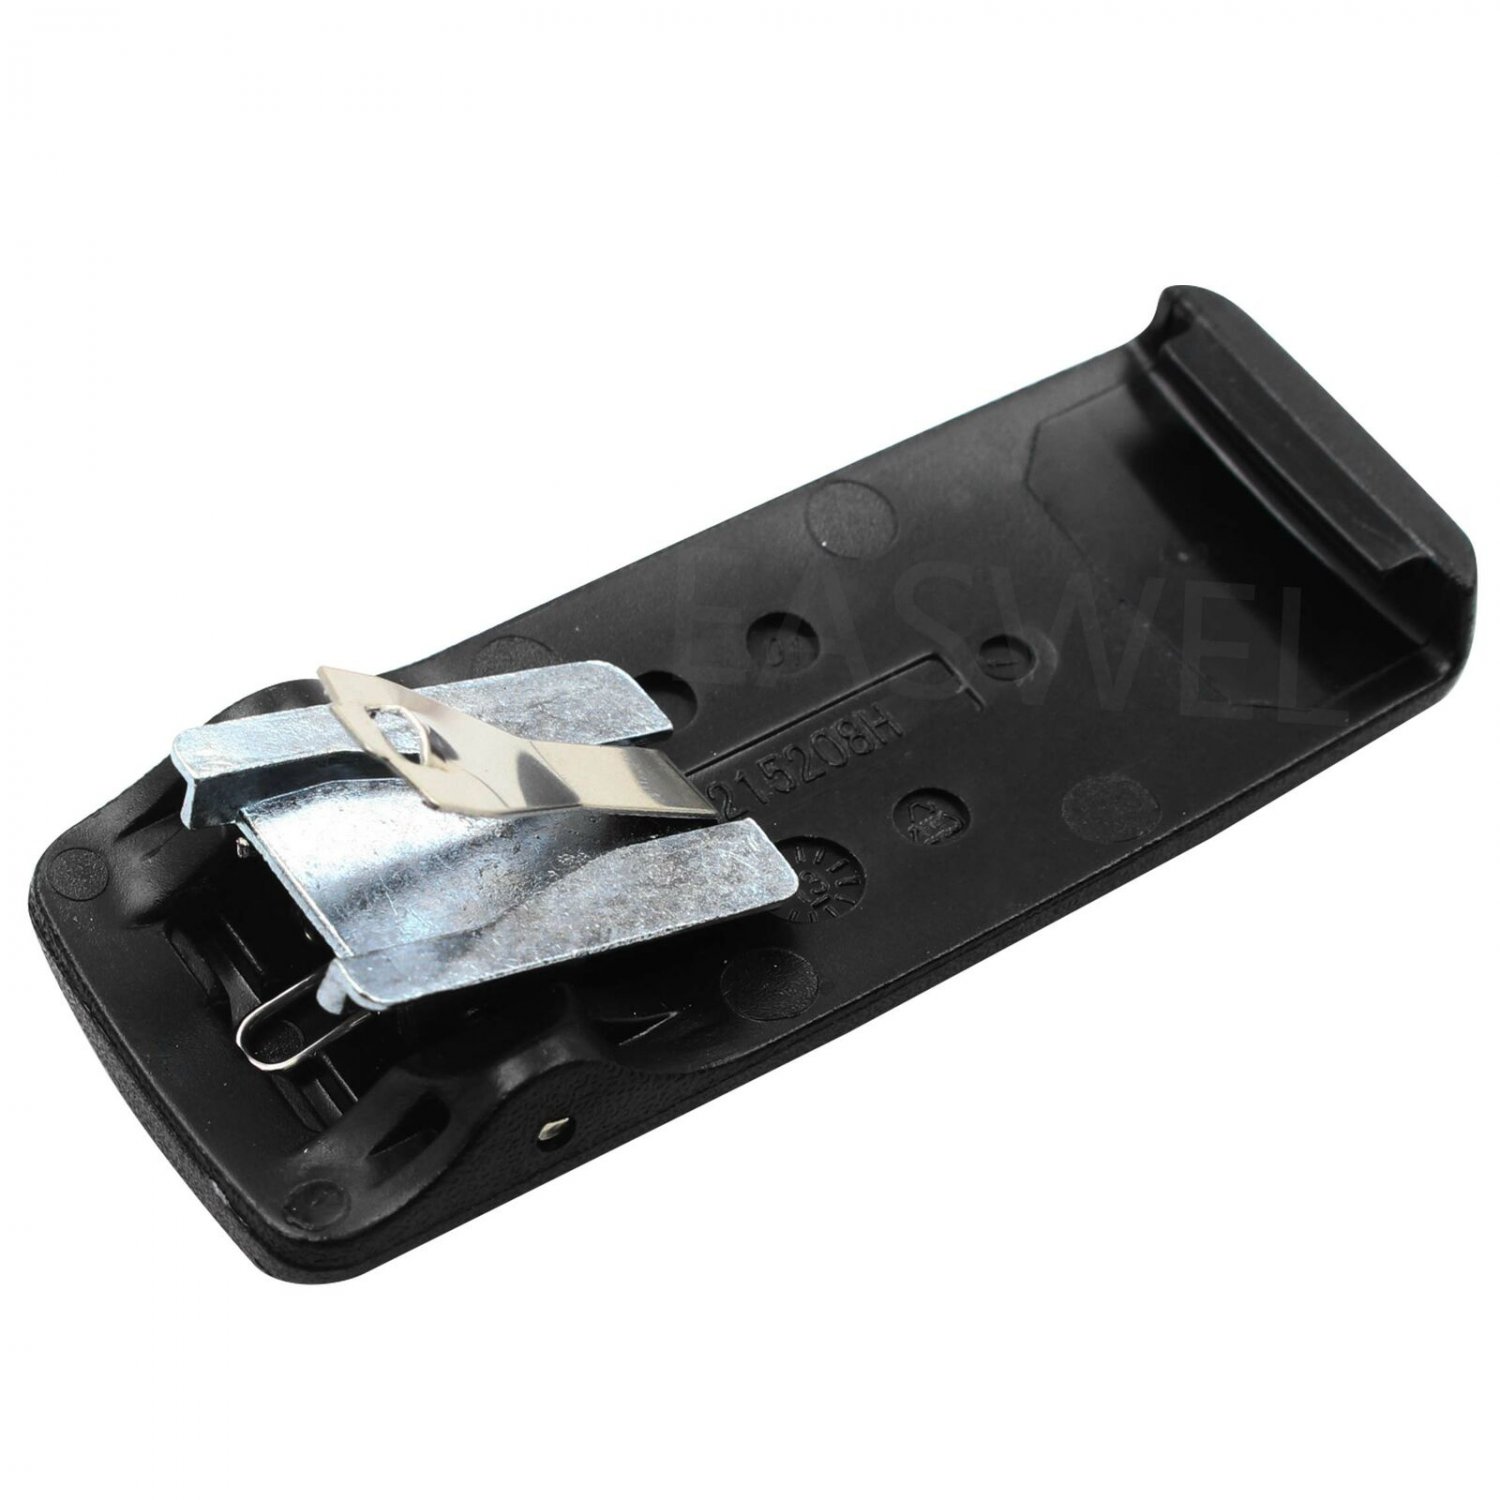 PMLN4651 Belt Clip For Motorola XPR6500 XPR6550 DGP4150 DGP6150 Handheld